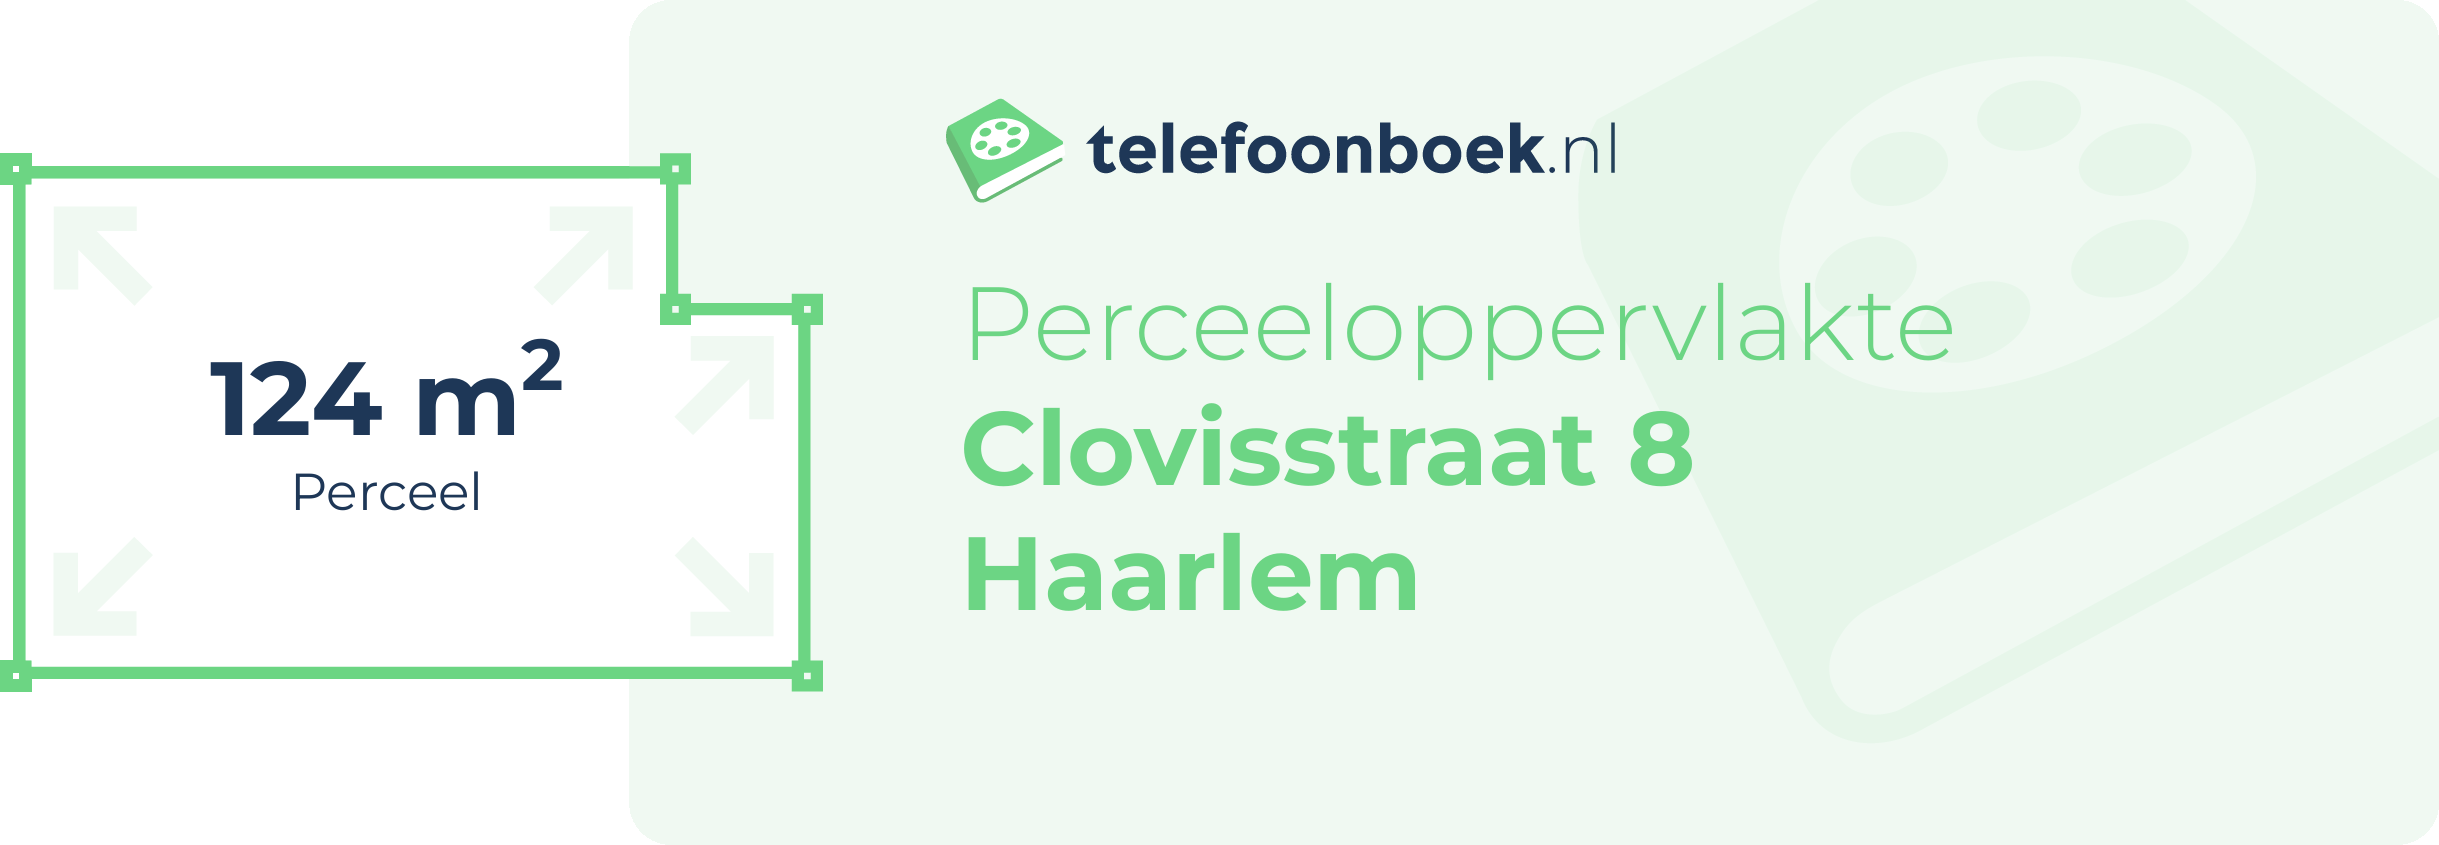 Perceeloppervlakte Clovisstraat 8 Haarlem